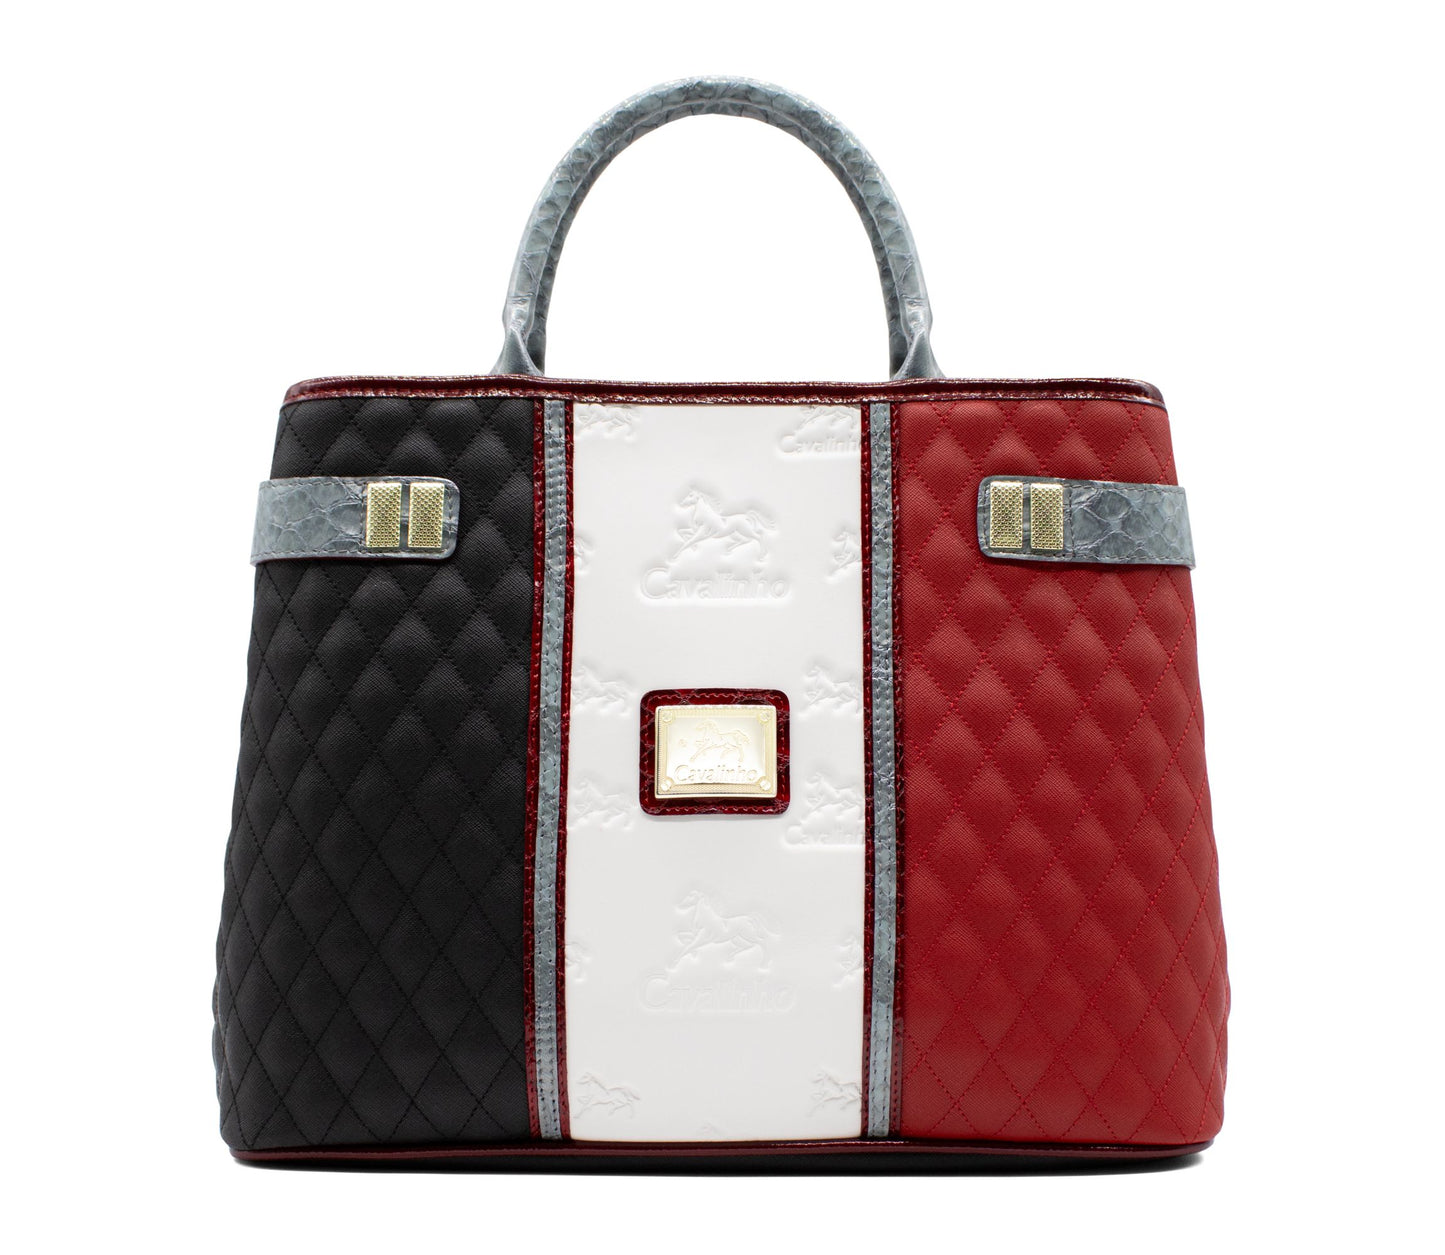 Cavalinho Royal Handbag - Black / White / Red / Silver - 18390145.23_1